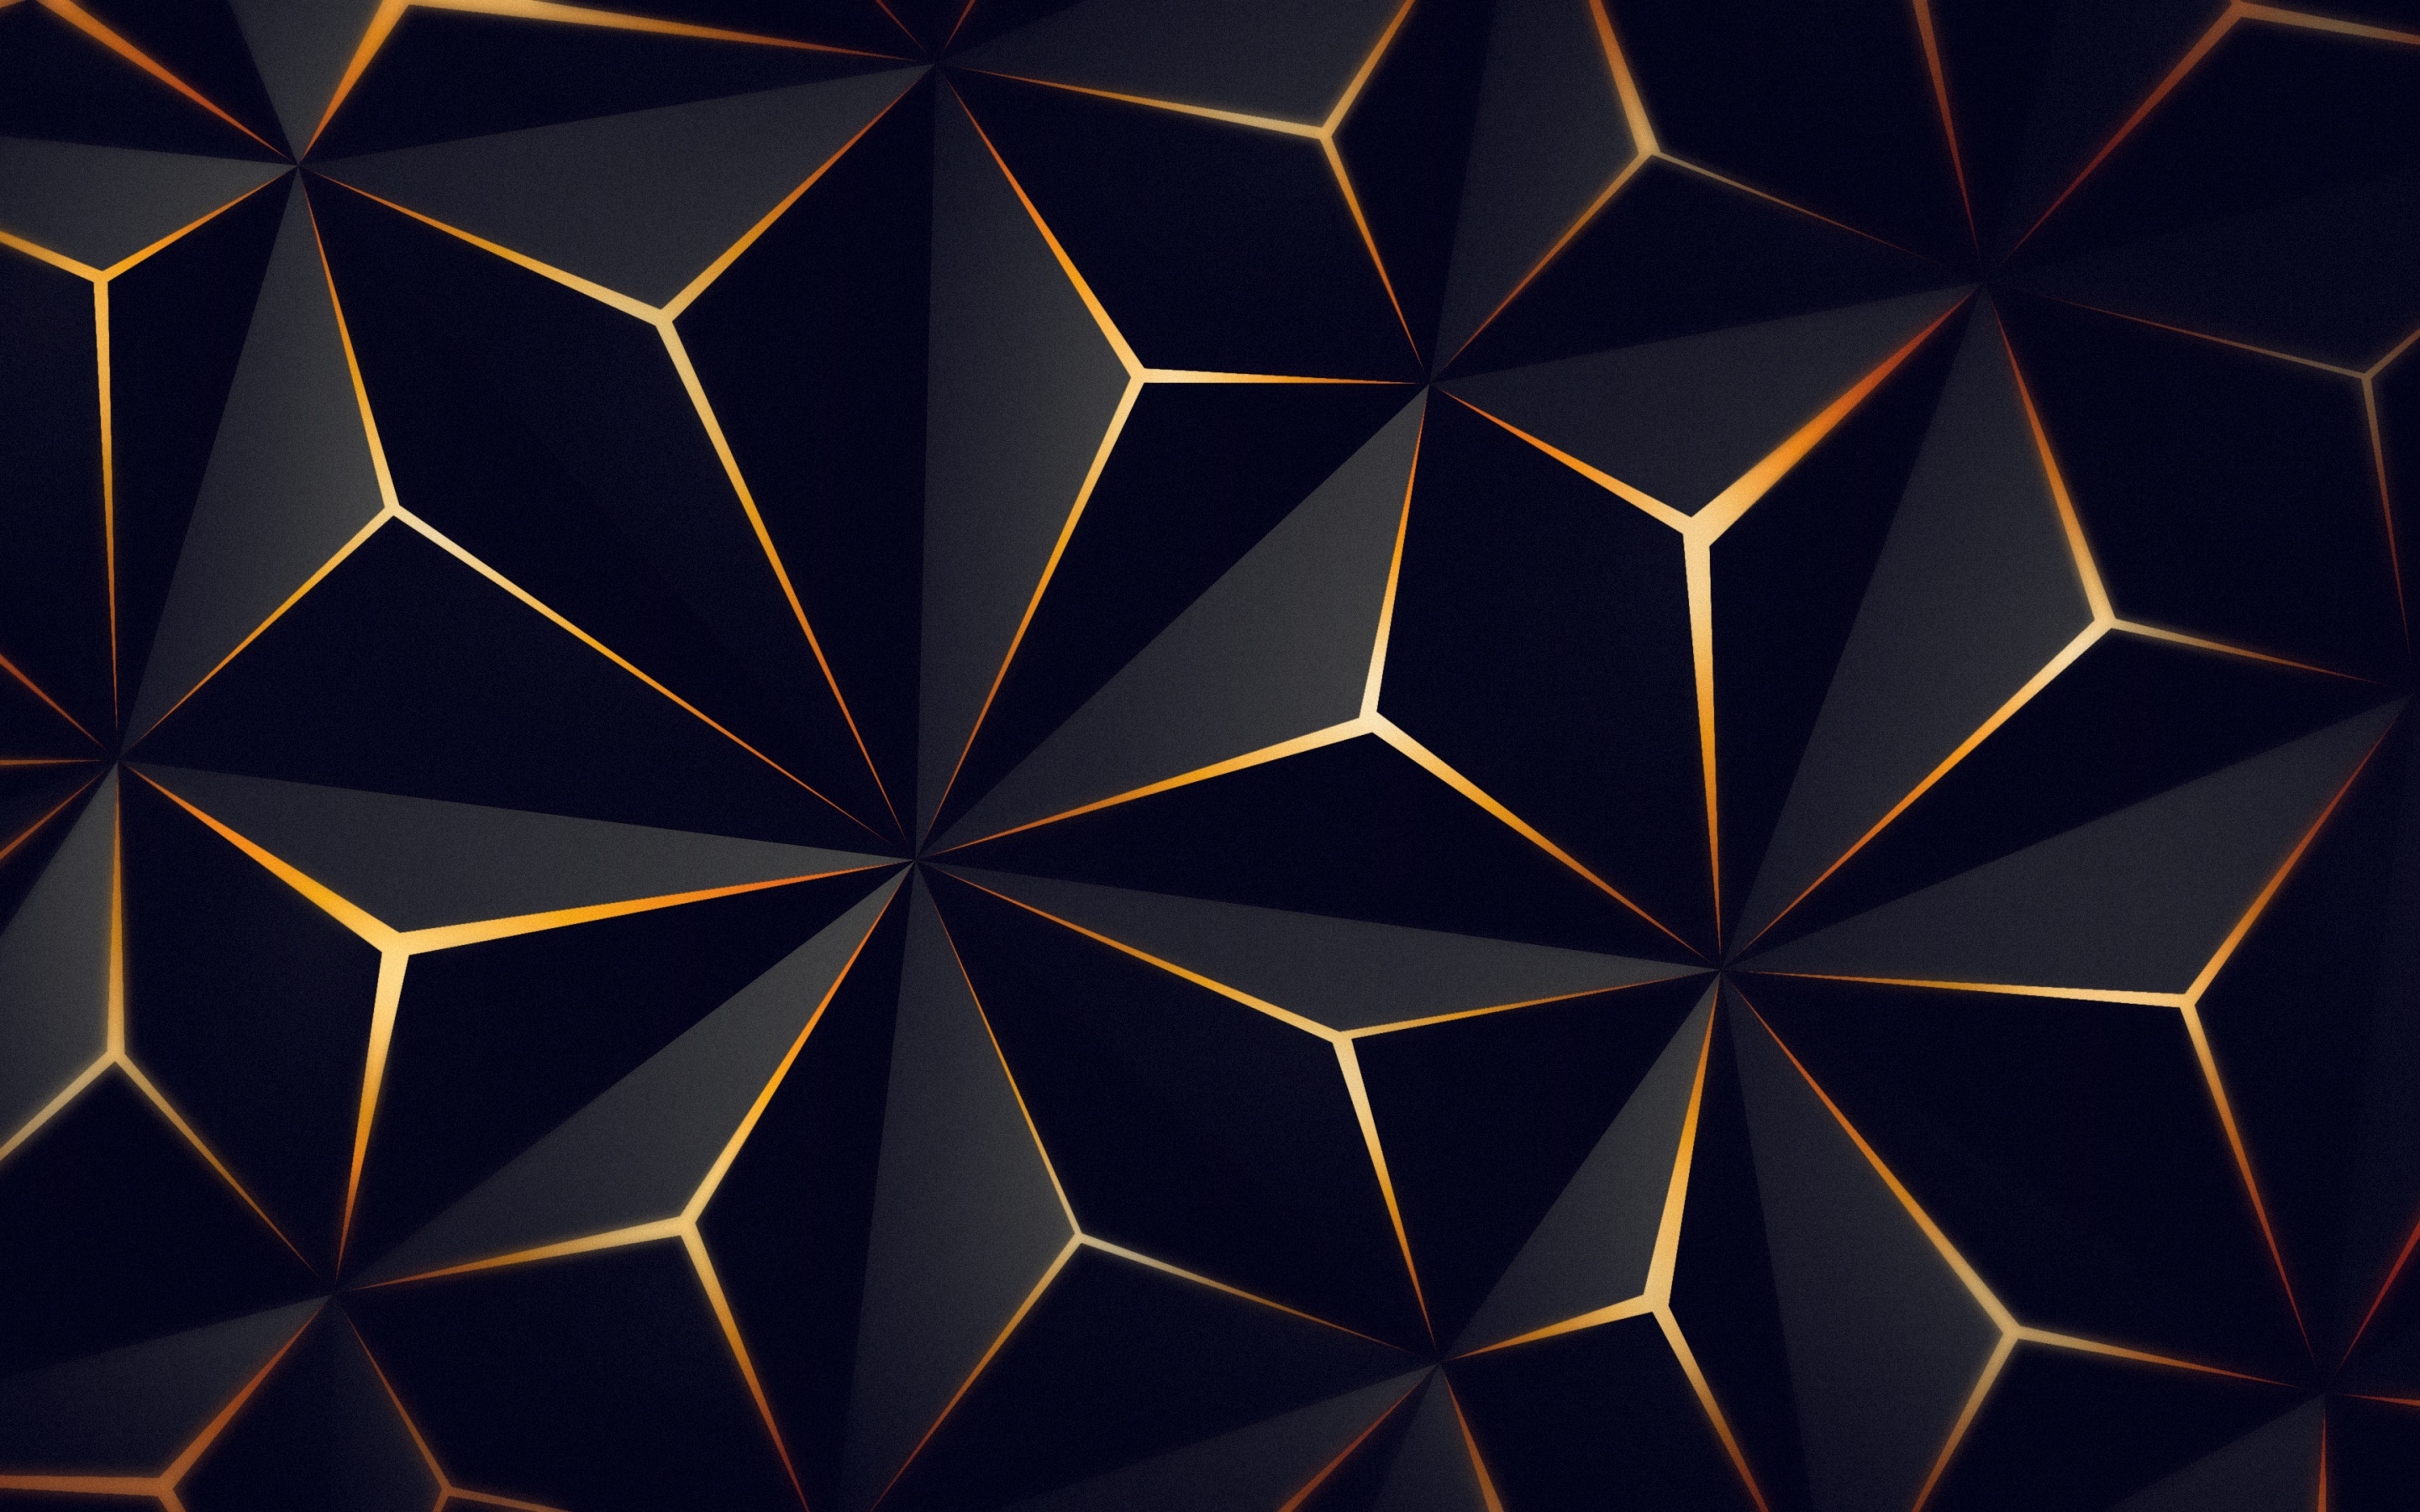 Triangle Solid Black Gold 4k Wallpaper 4K